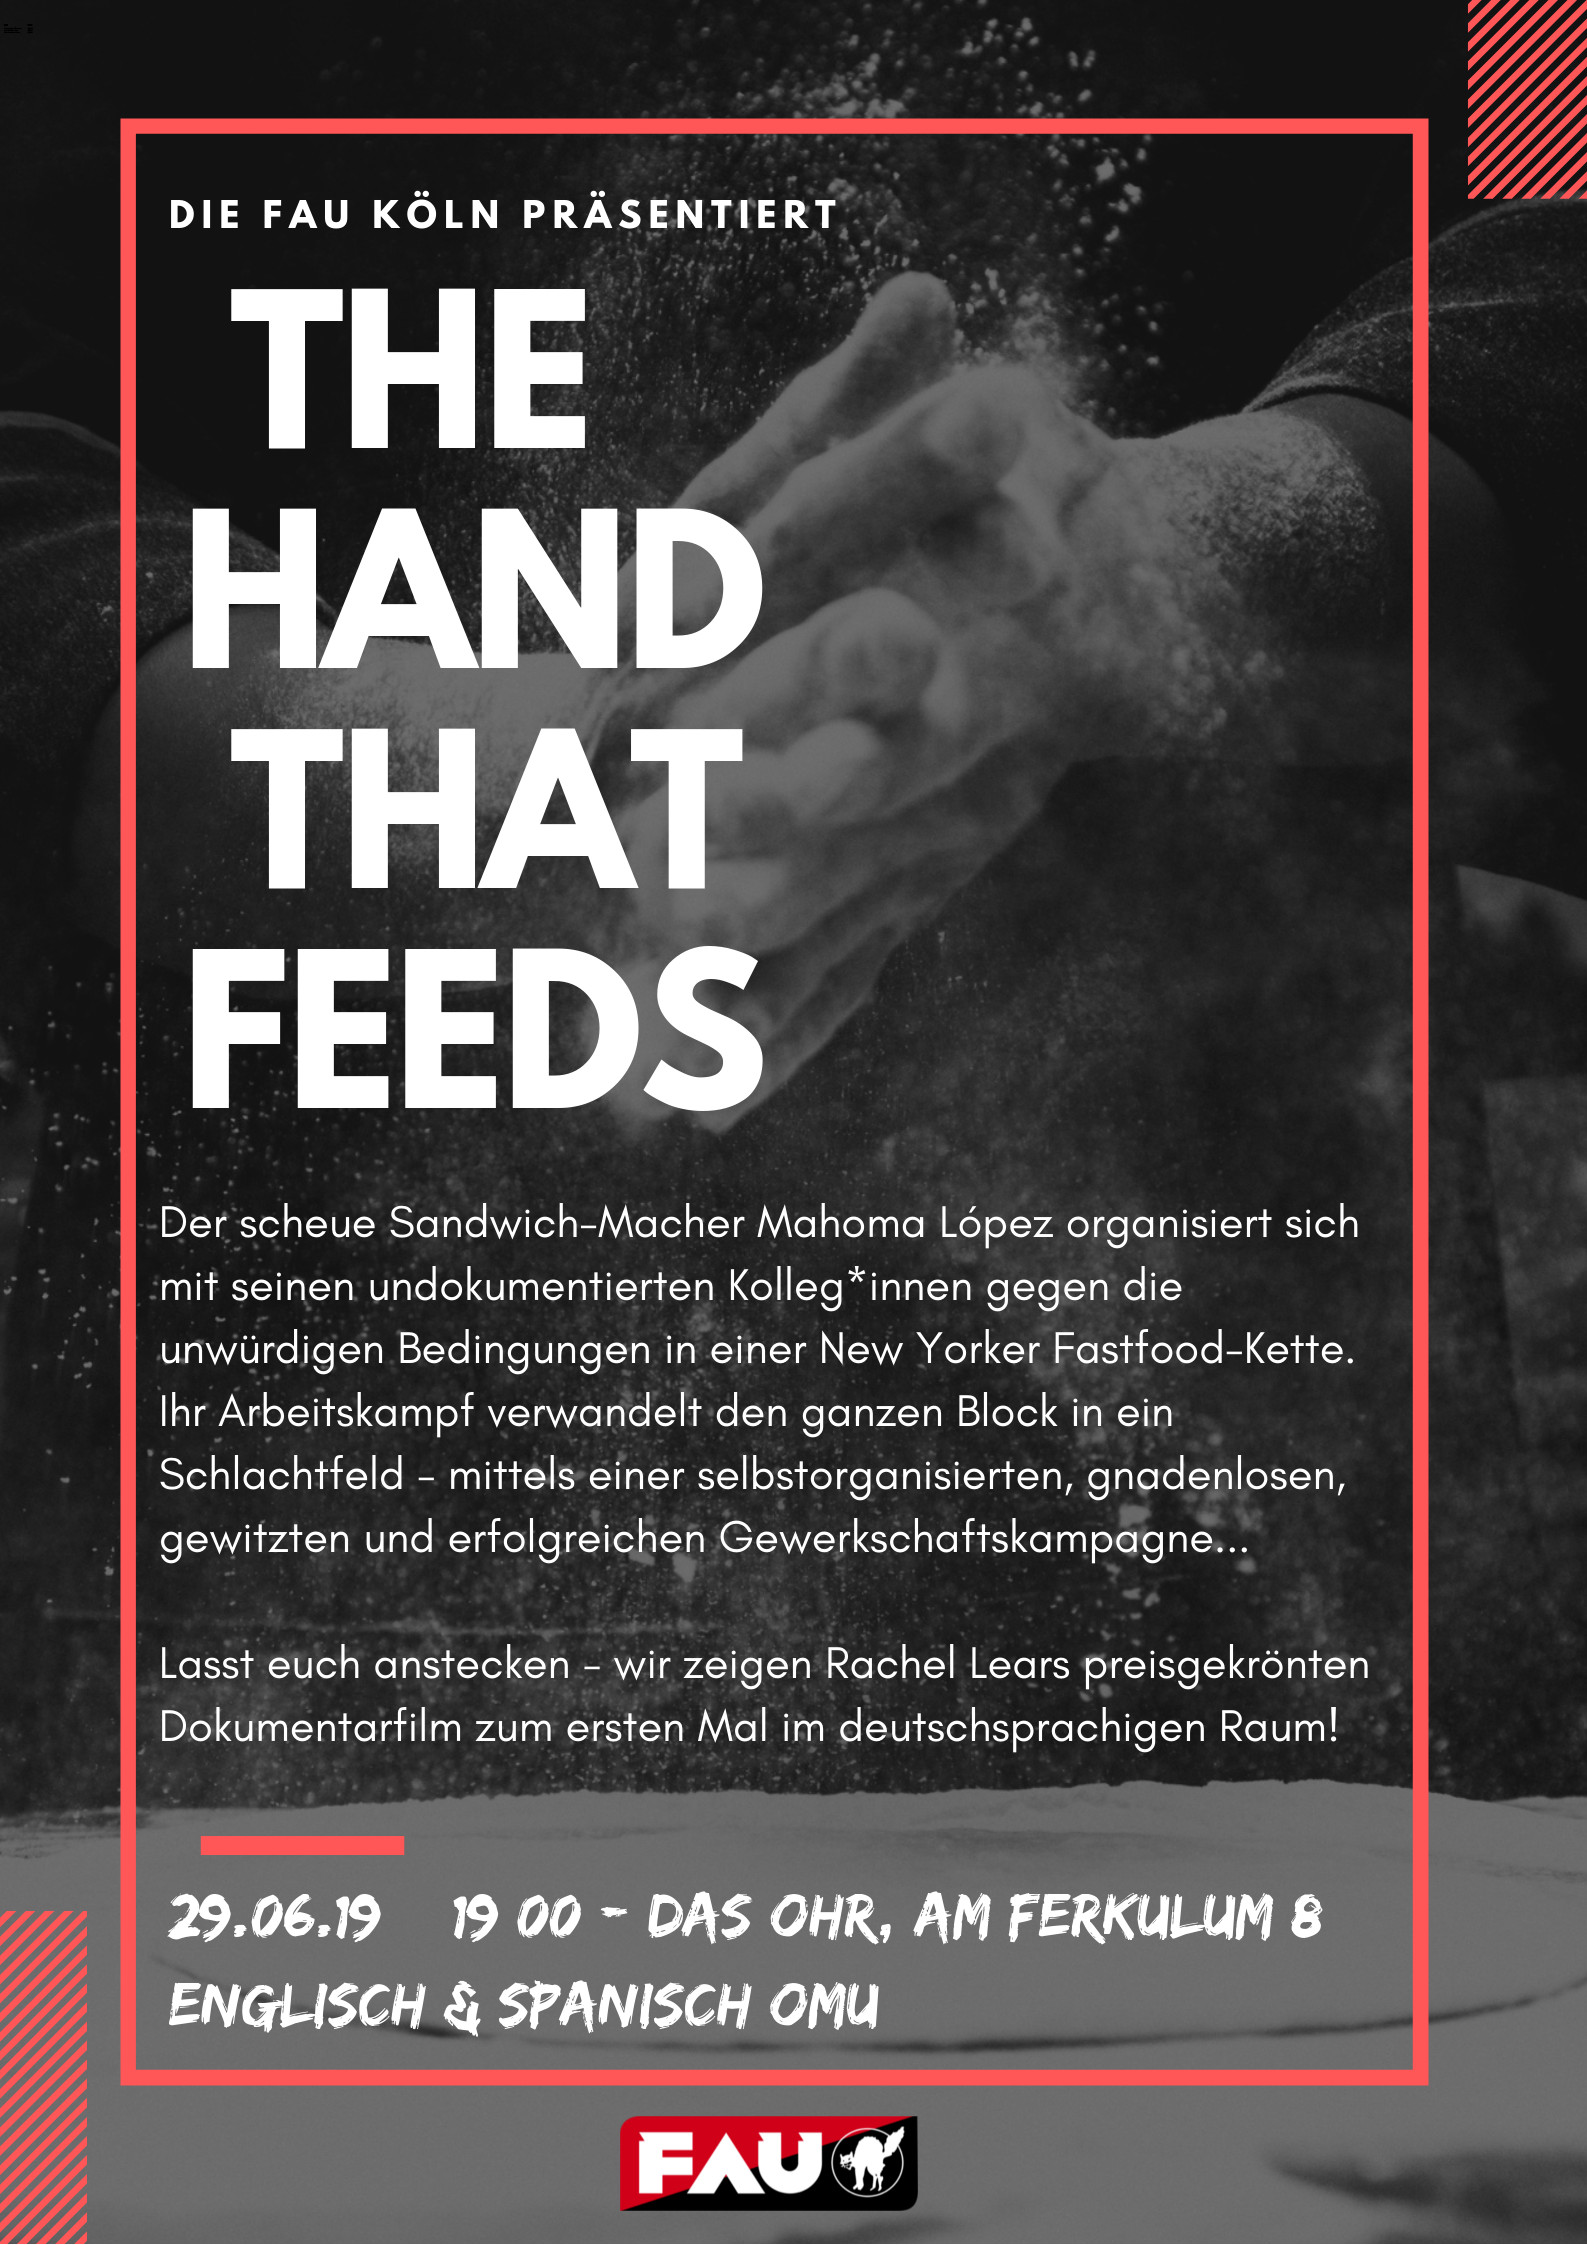 Filmvorführung: "The Hand That Feeds"